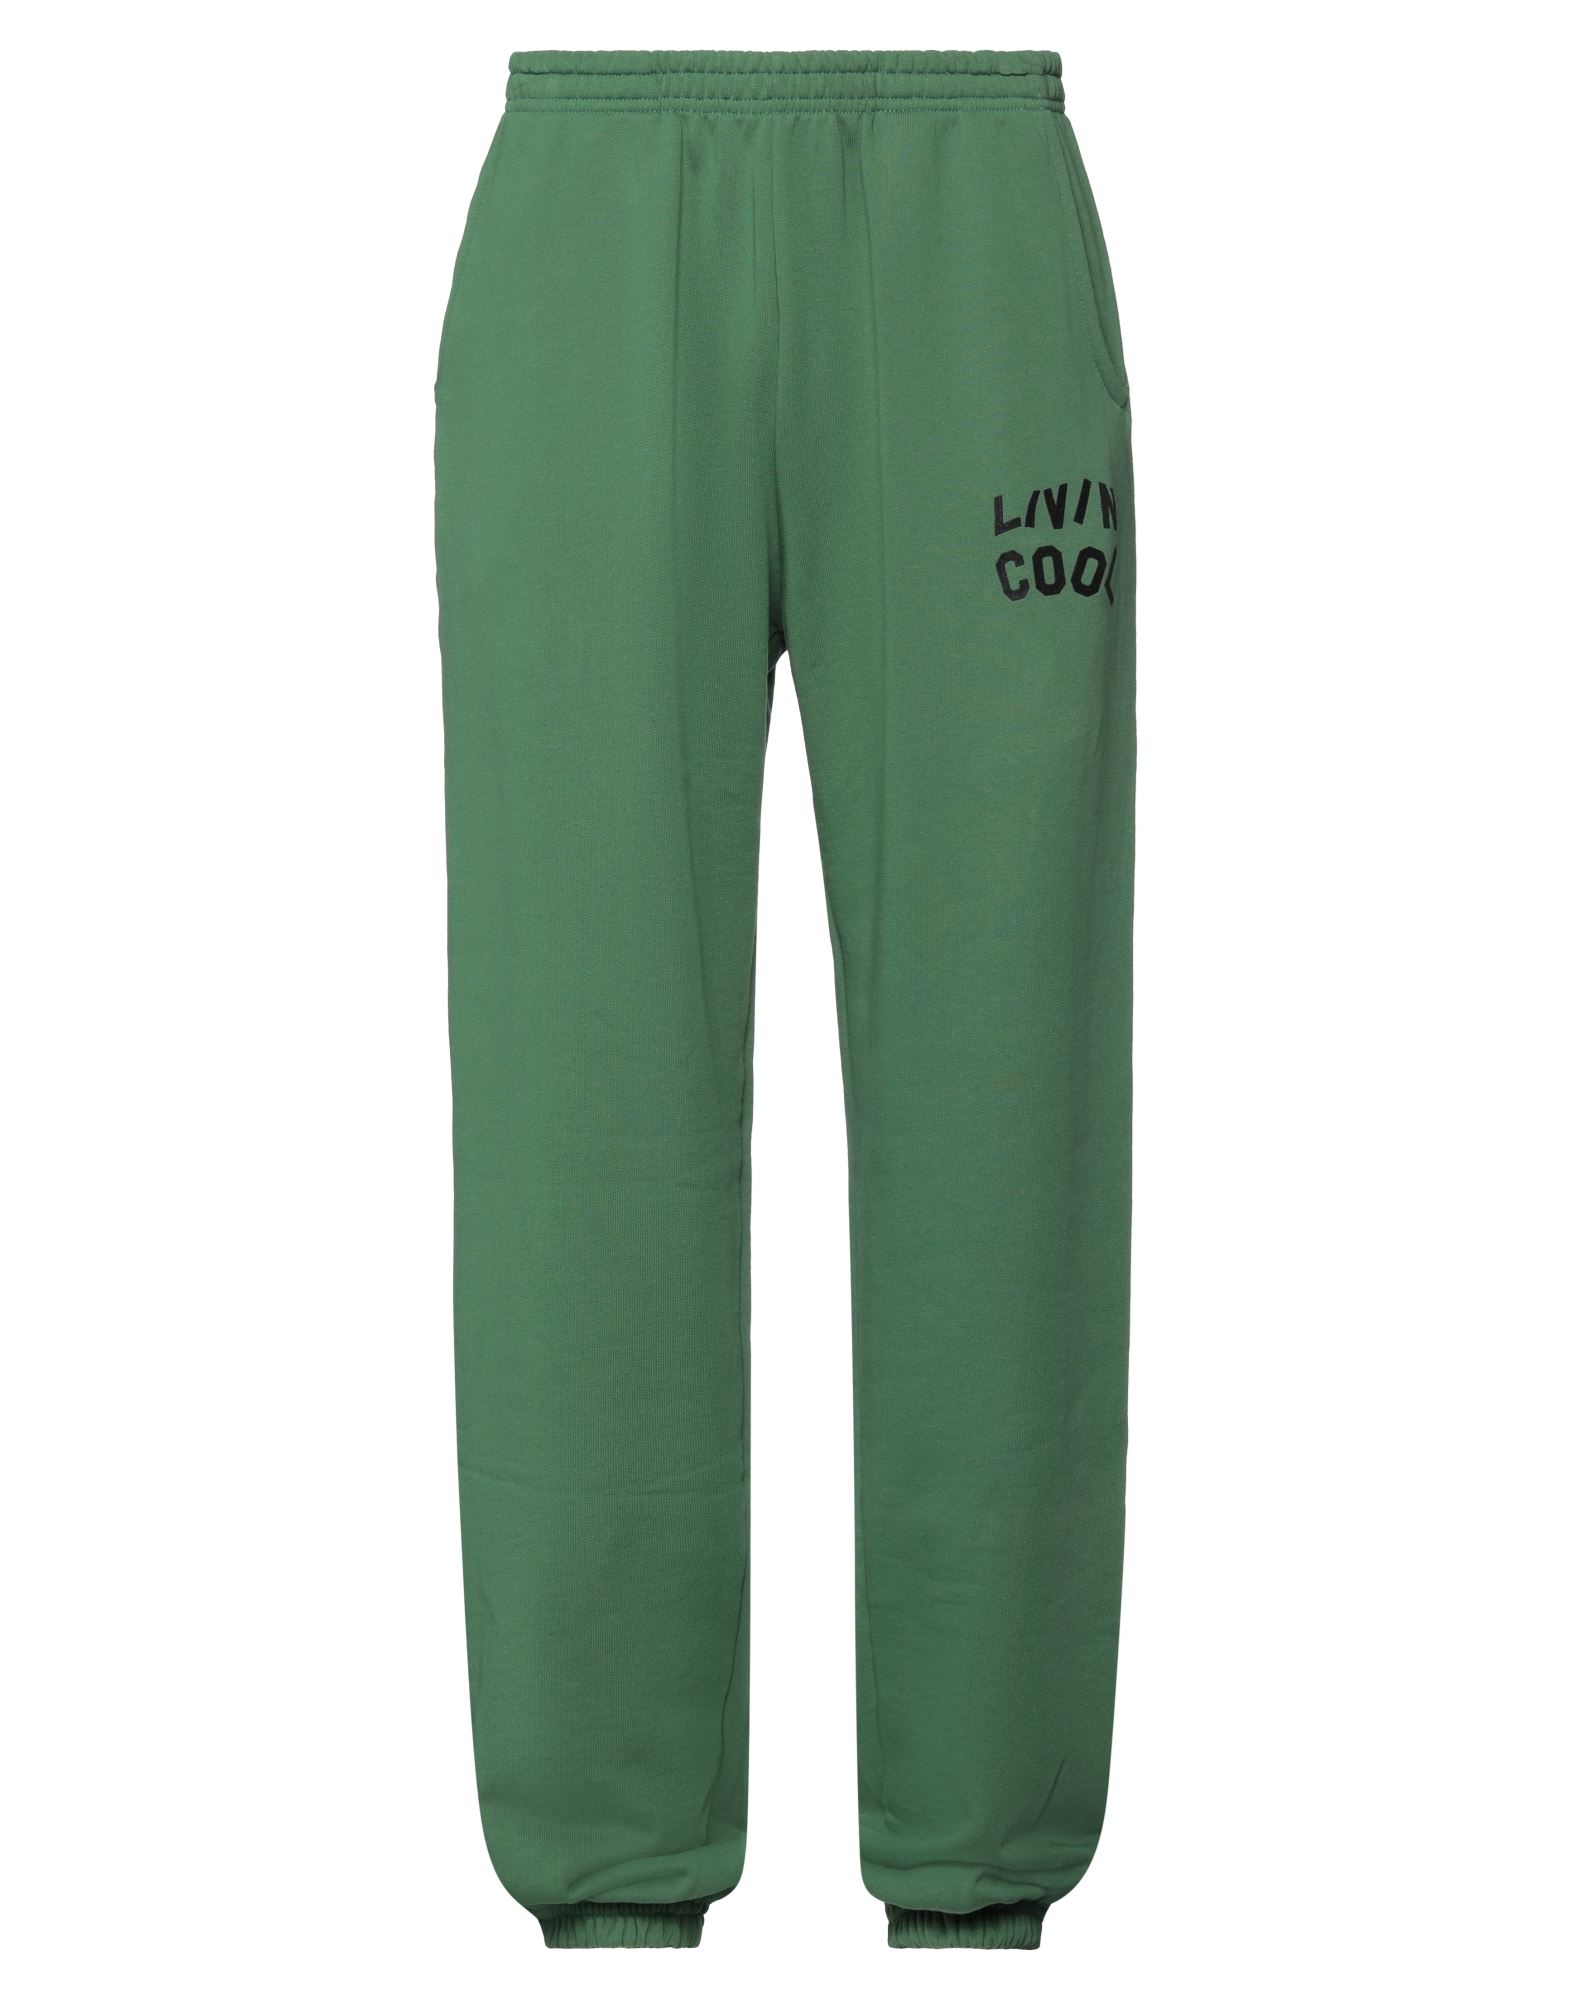 Livincool Pants In Green